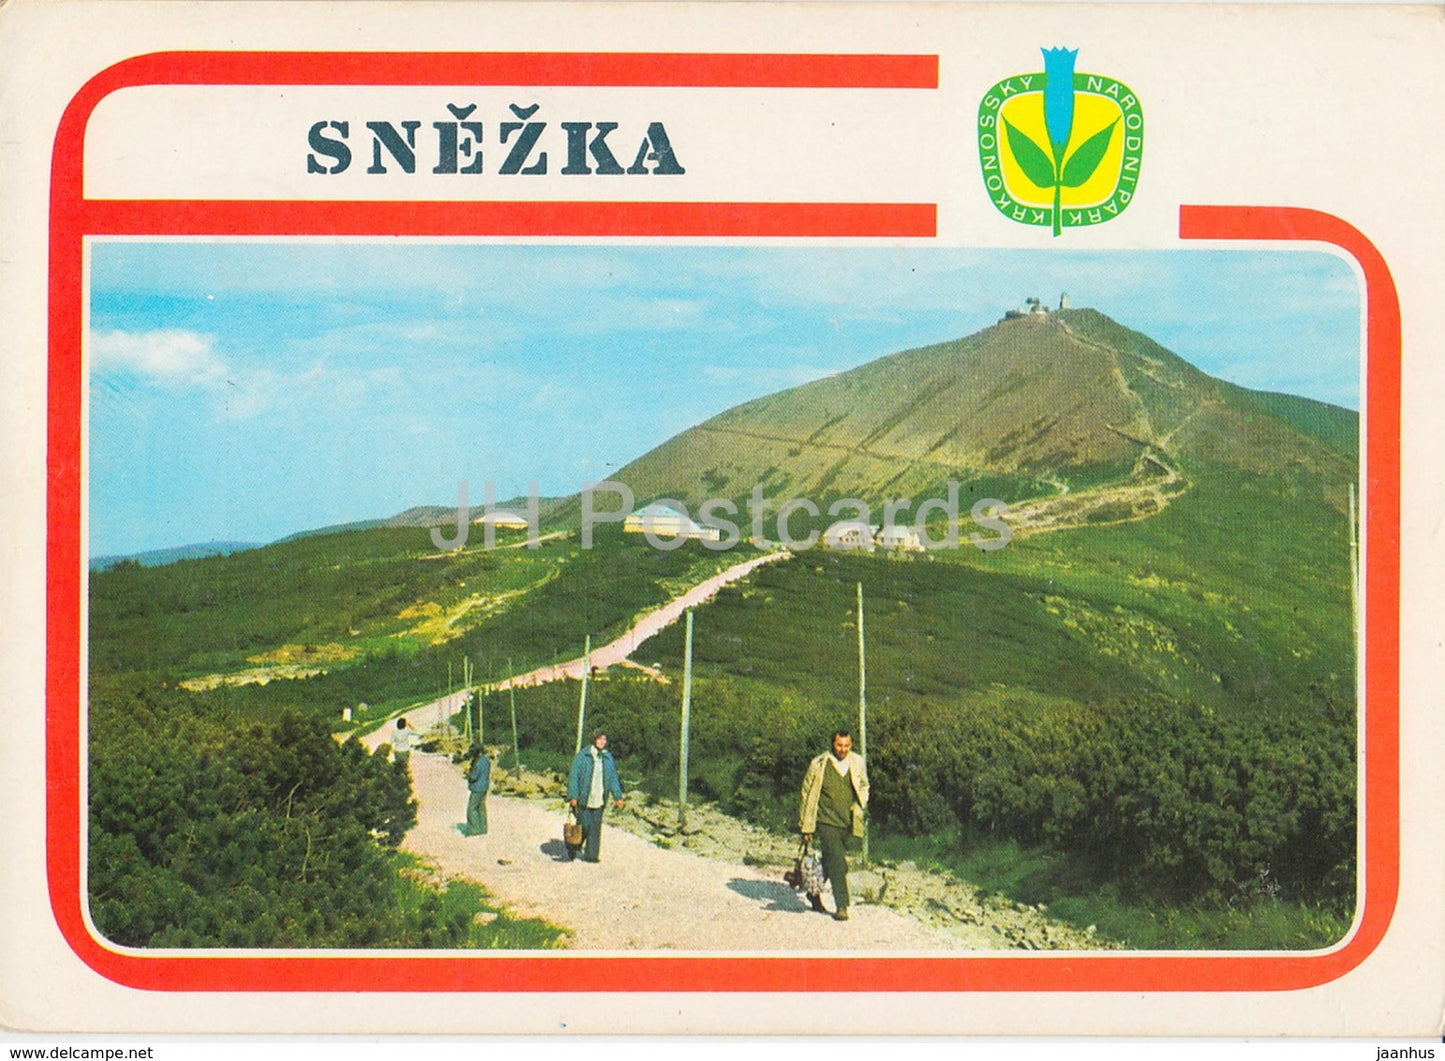 Snezka 1602 m - Highest Peak of the Giant Mountains - Czechoslovakia - Czech Republic - used - JH Postcards